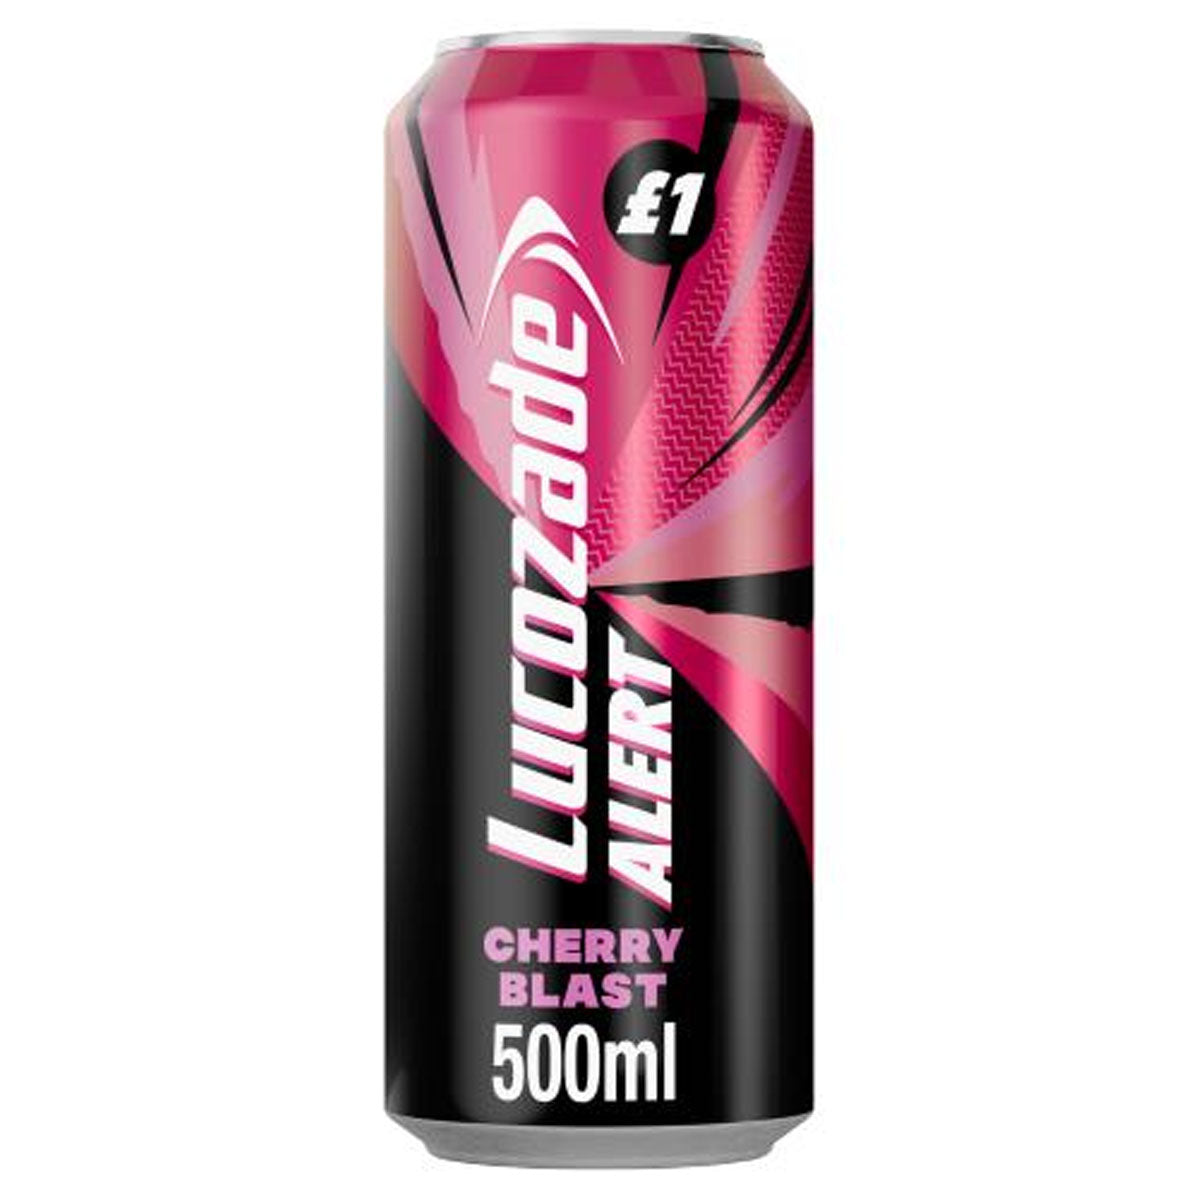 Lucozade - Alert Cherry Blast Energy Drink - 500ml.